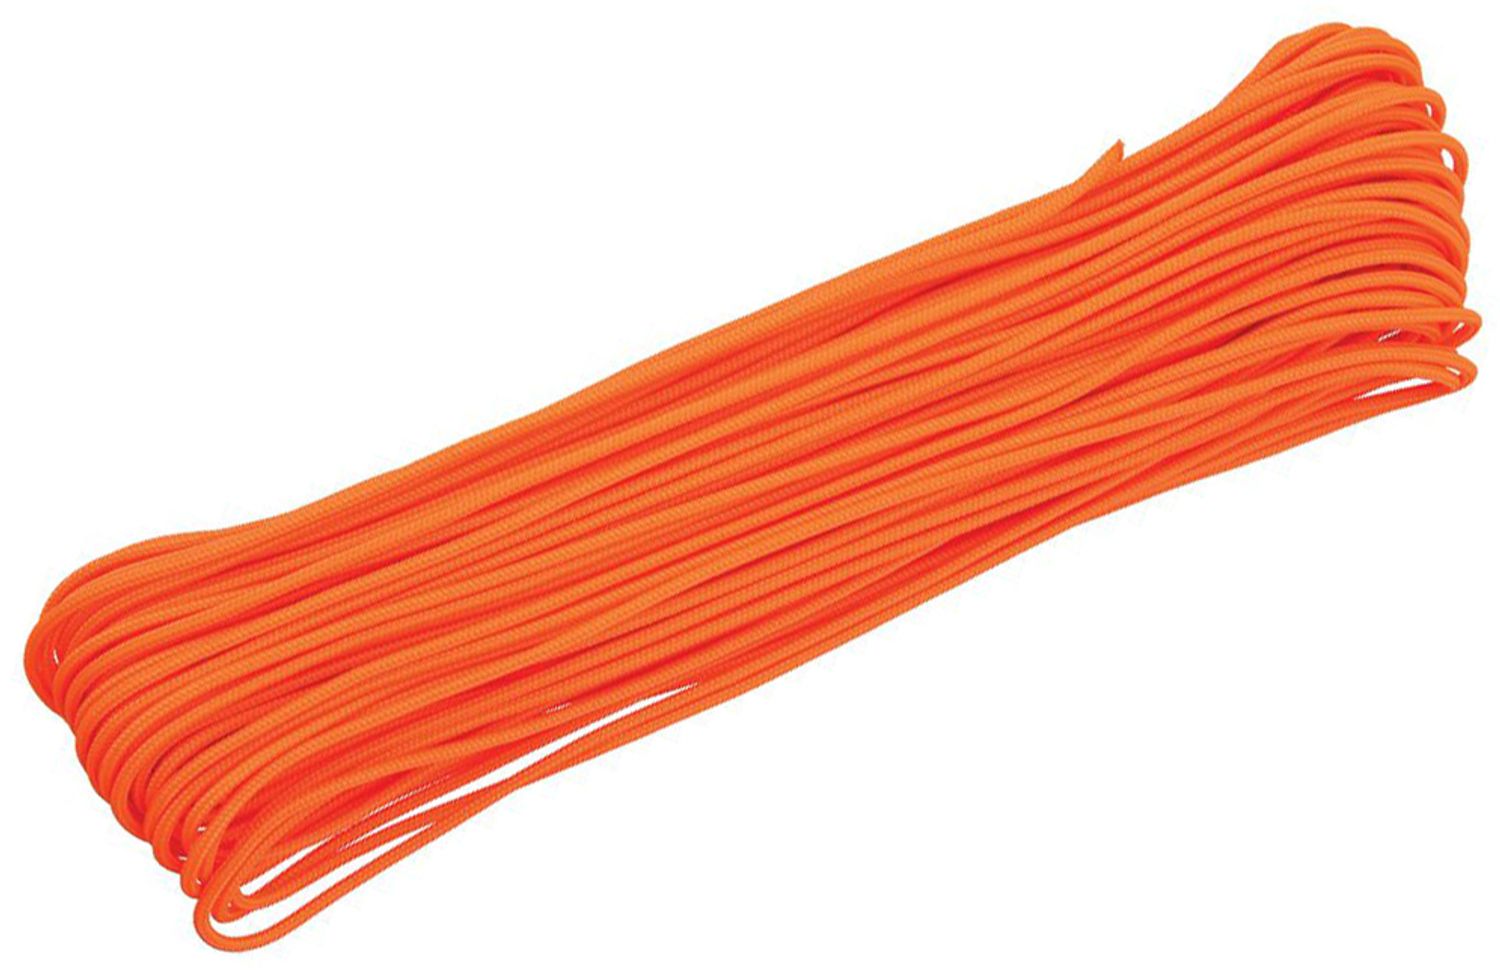 Atwood Rope 275 Paracord, Neon Orange, 100 Feet - KnifeCenter - RG1152